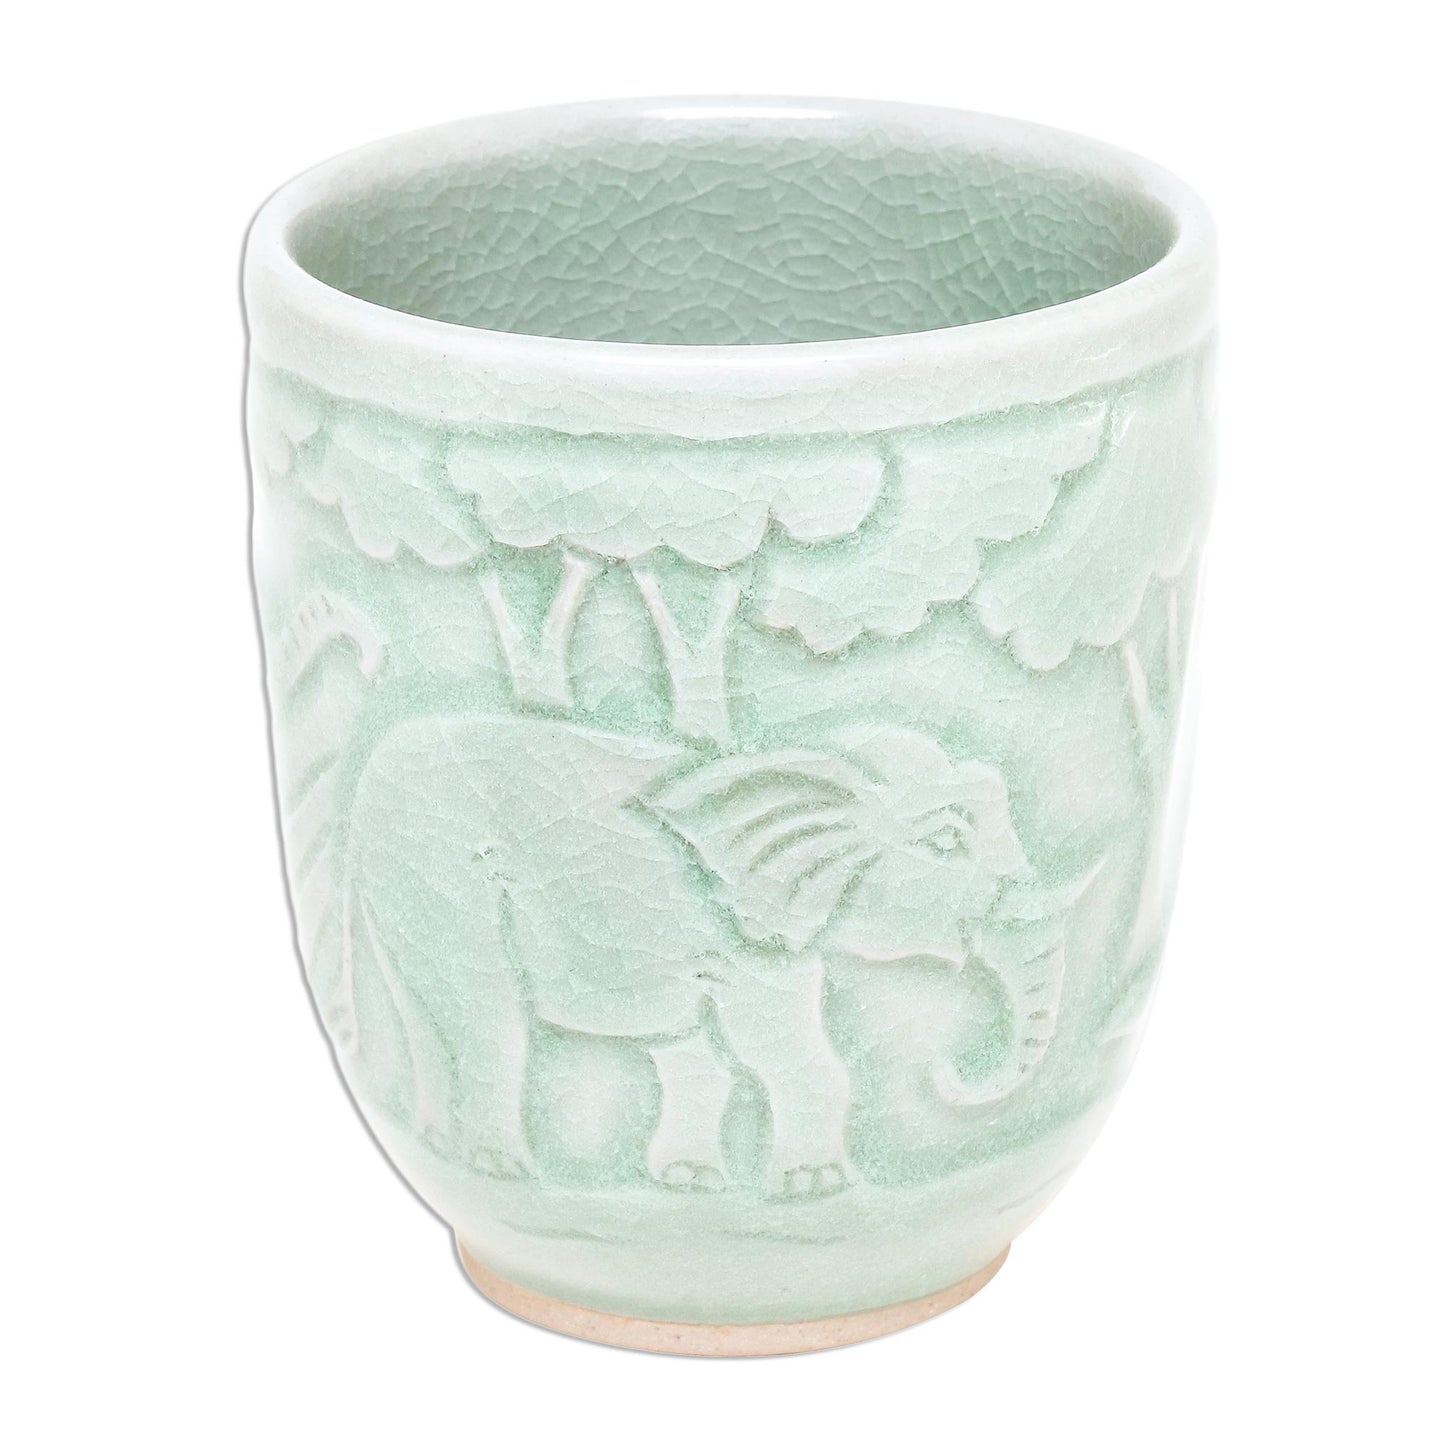 Elephant Forest Elephant-Themed Celadon Ceramic Teacup from Thailand